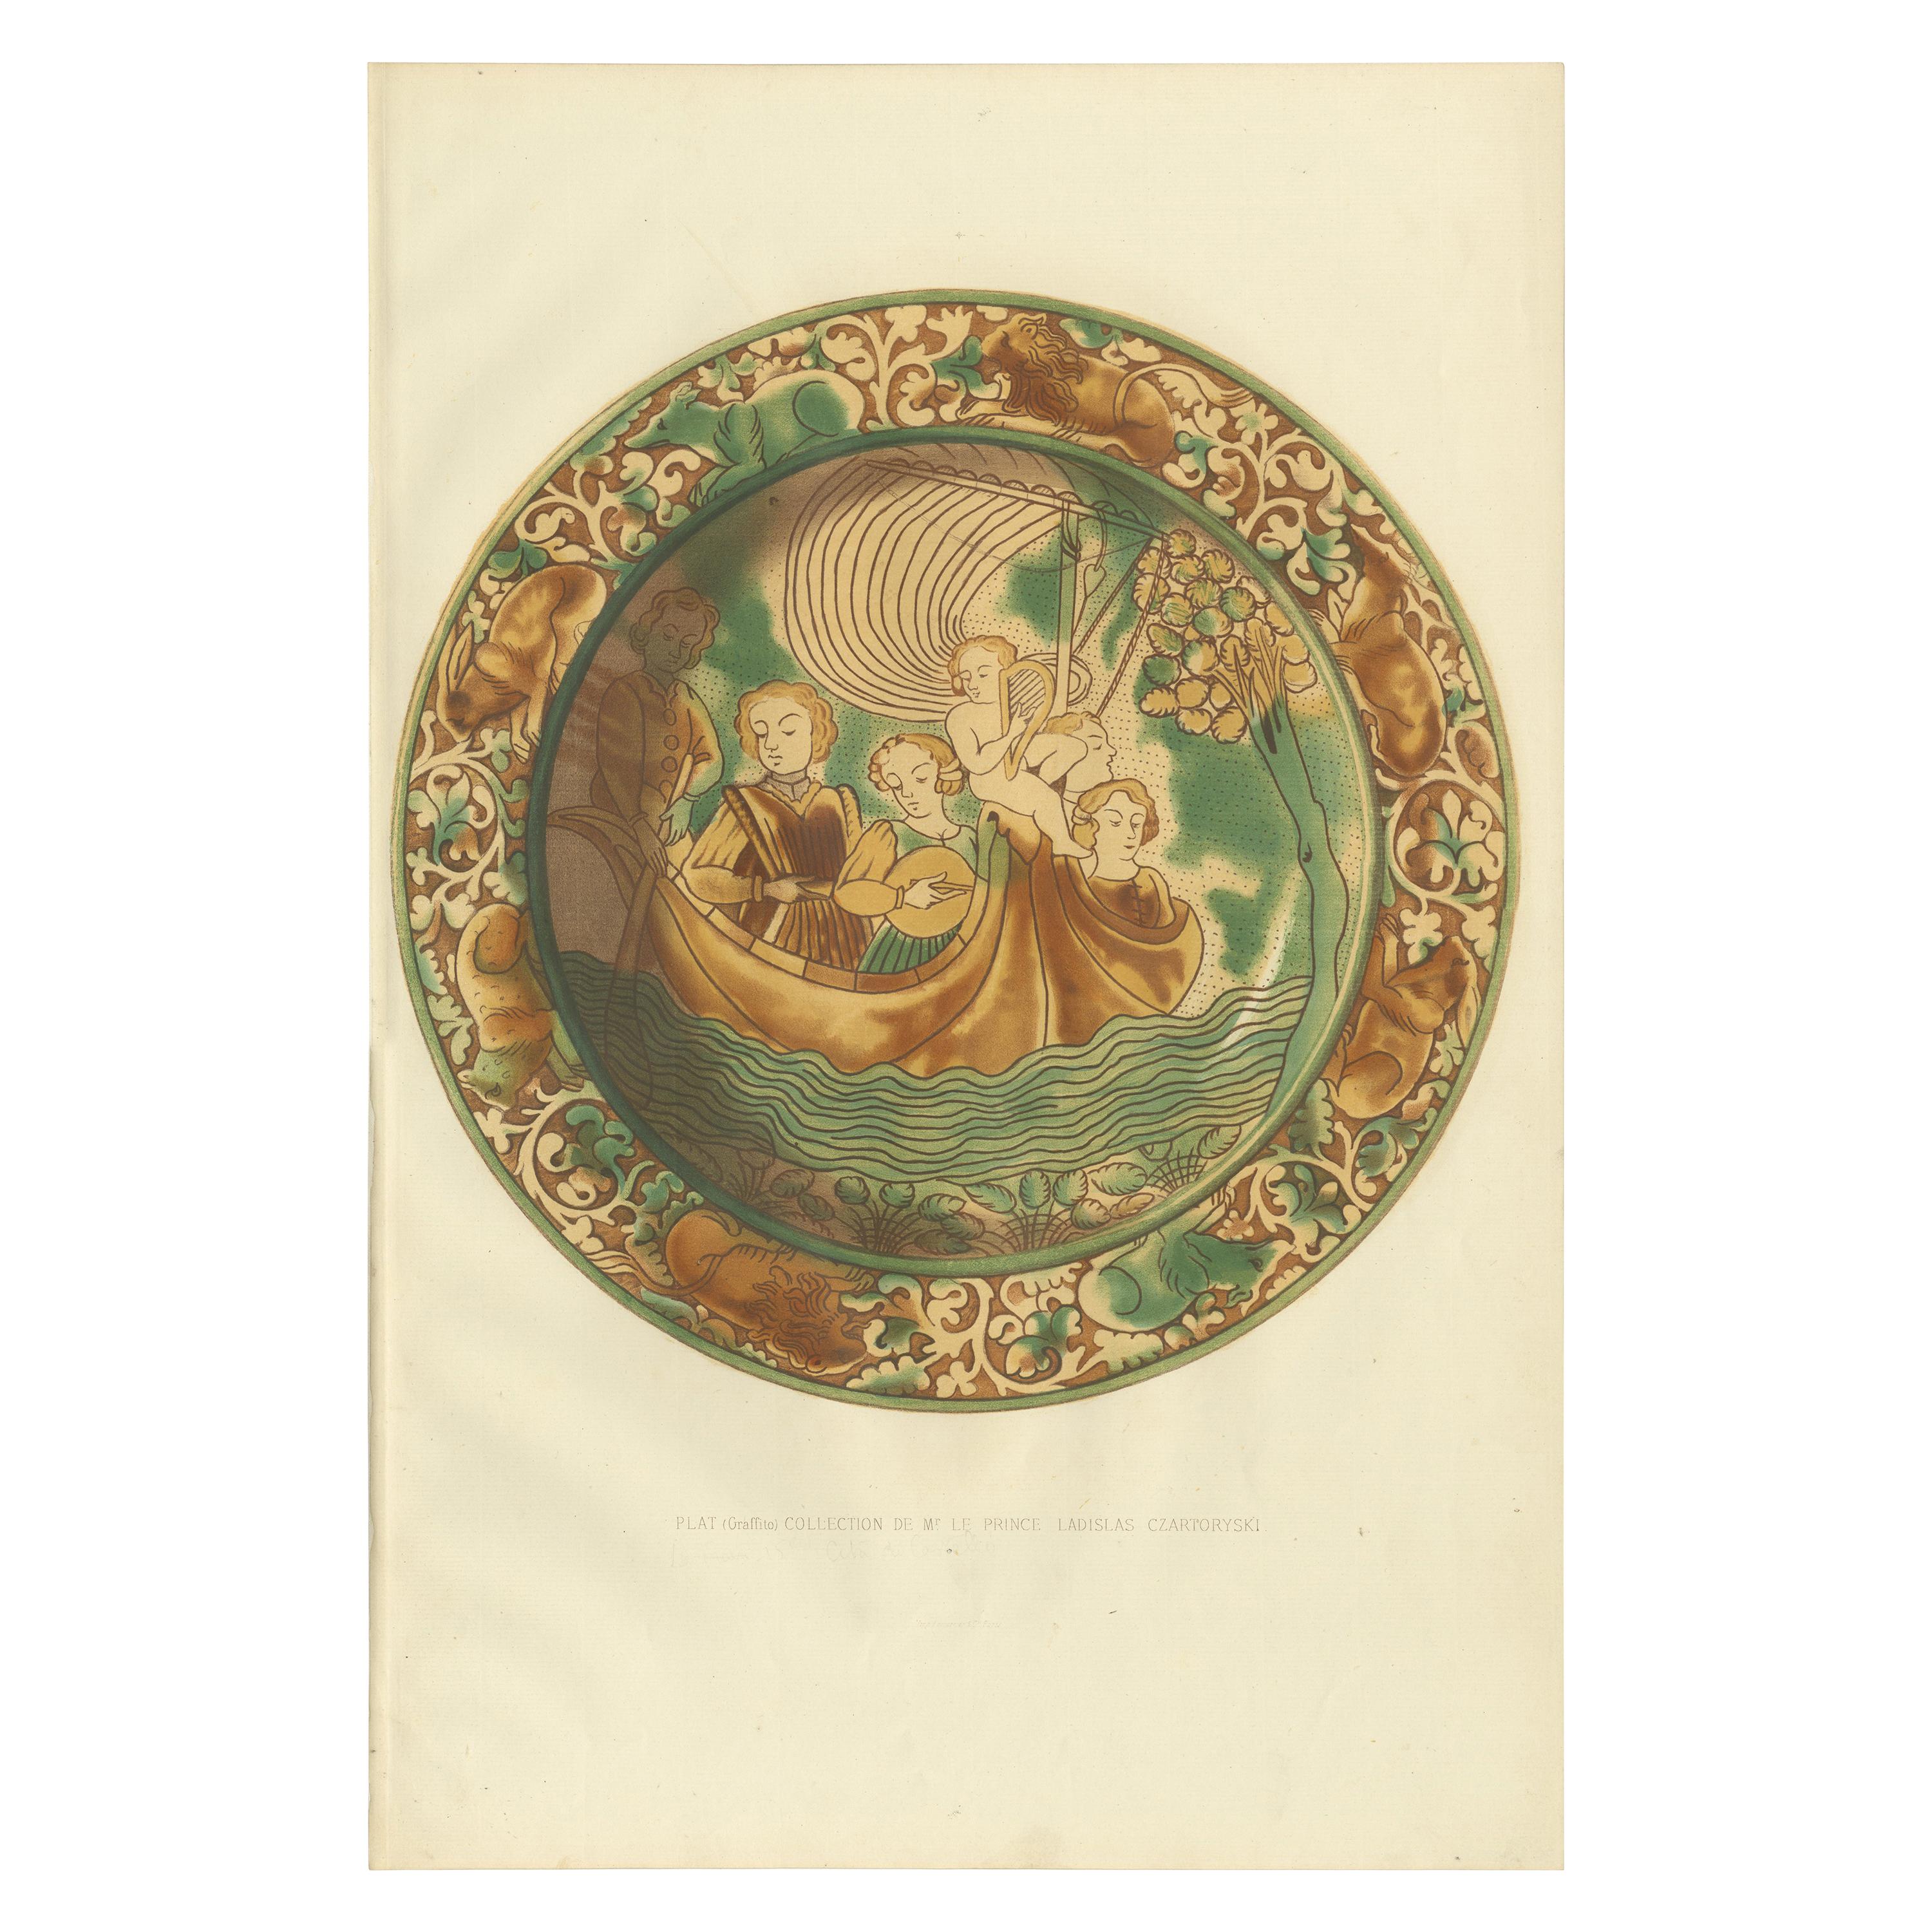 Antique Print of a Plate of Mr. le Prince Ladislas Czartoryski by Delange '1869'